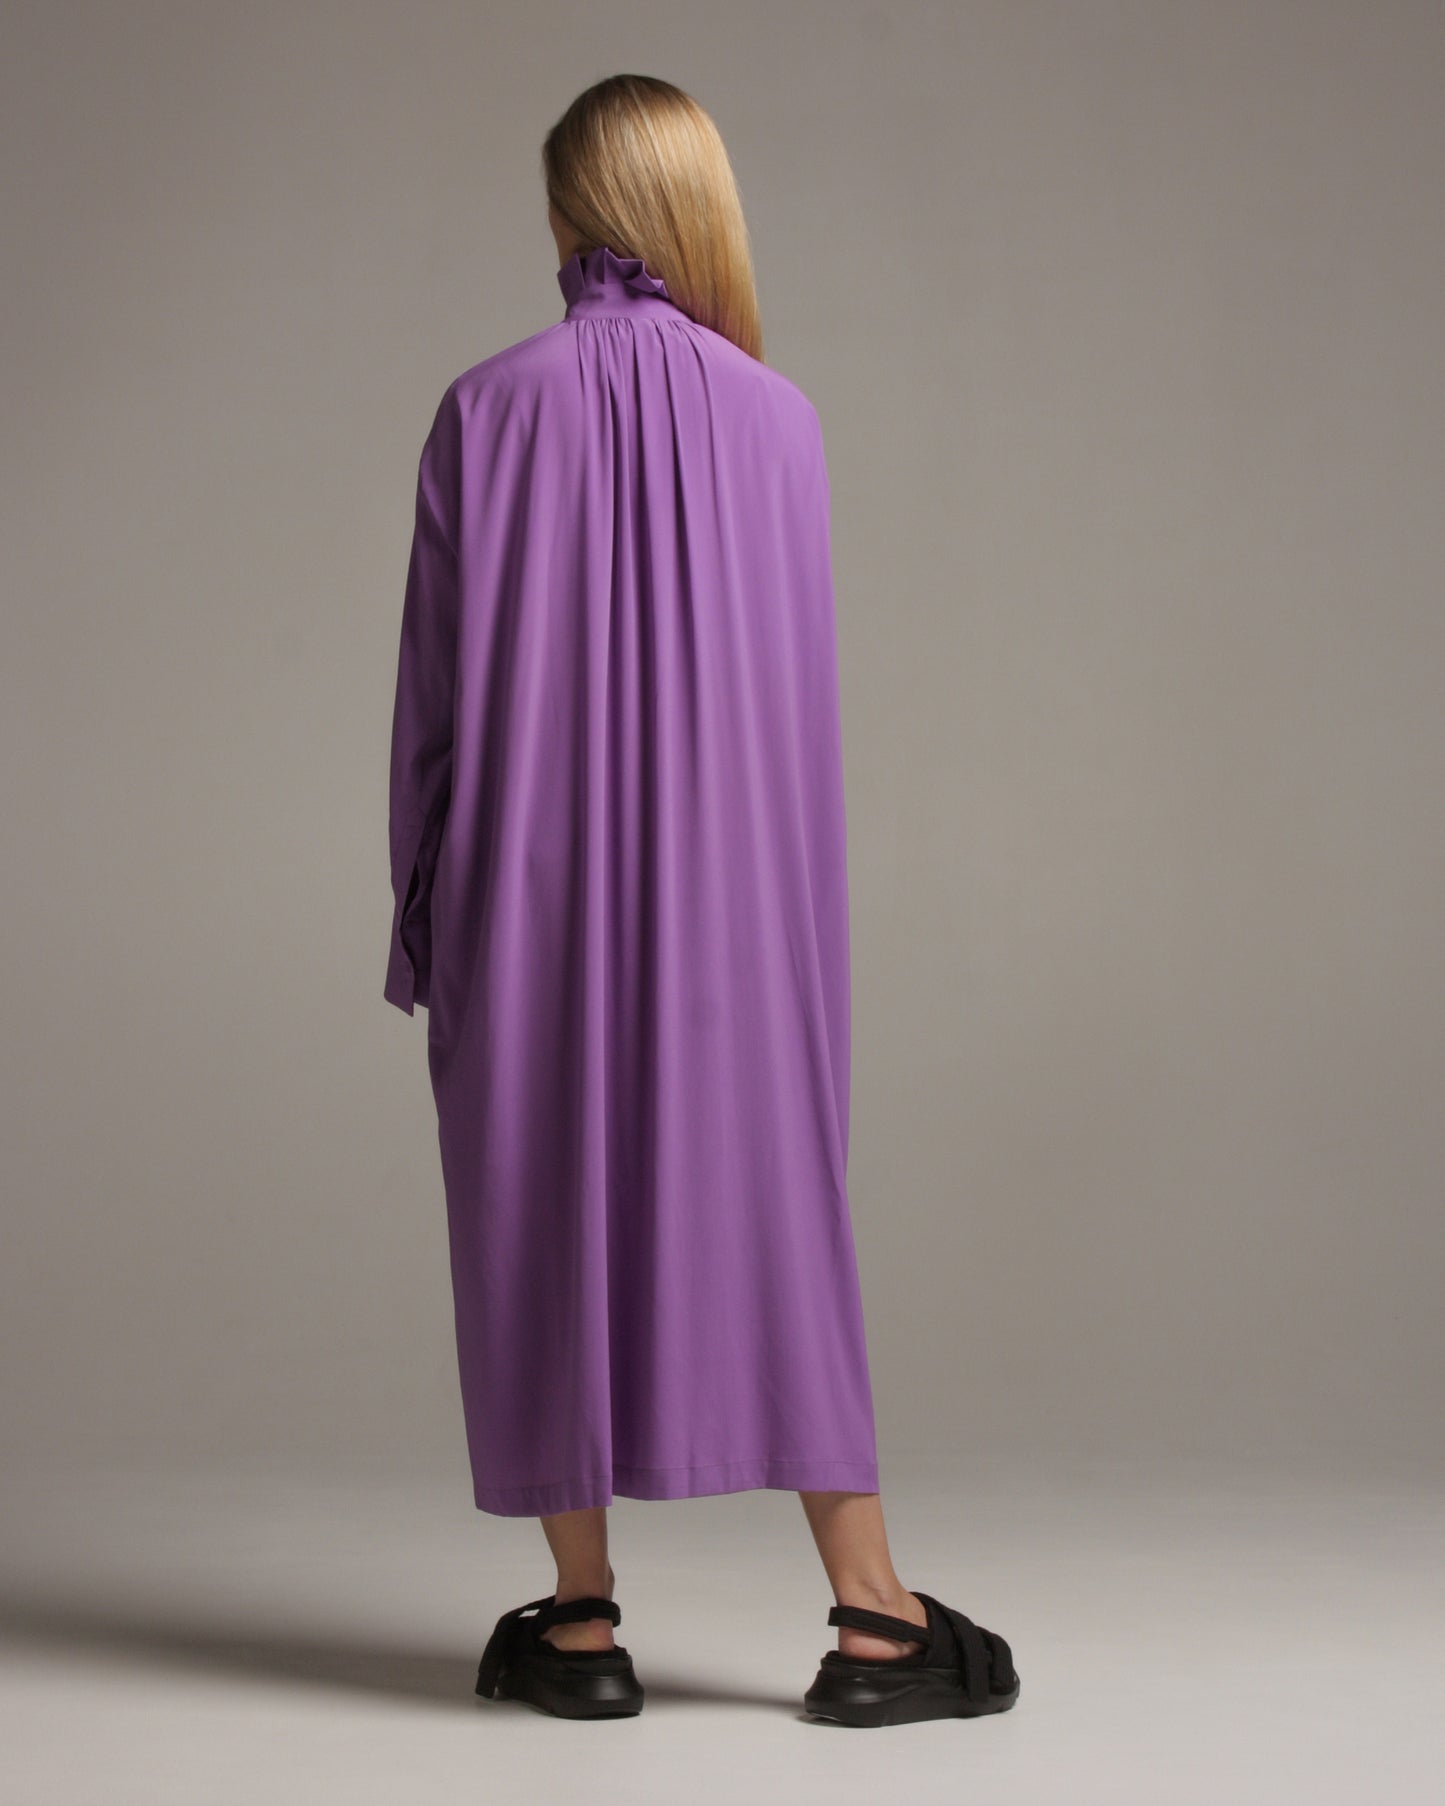 Diana Long Sleeve Lavender Dress